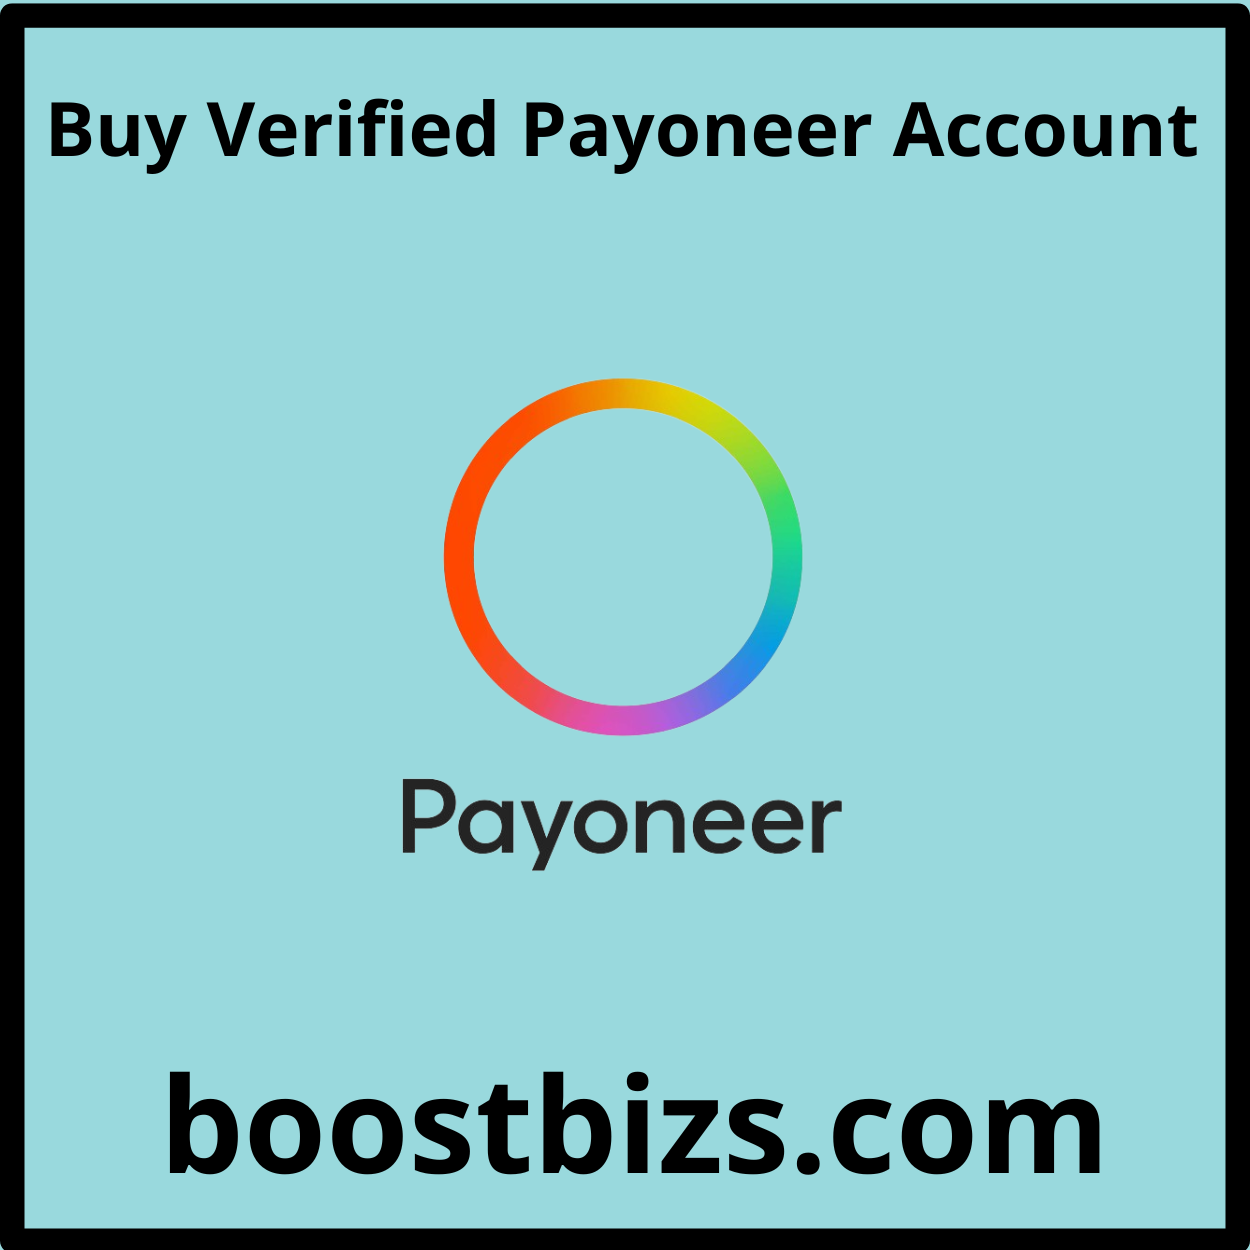 Buy Verified Payoneer Account - BOOSTBIZS